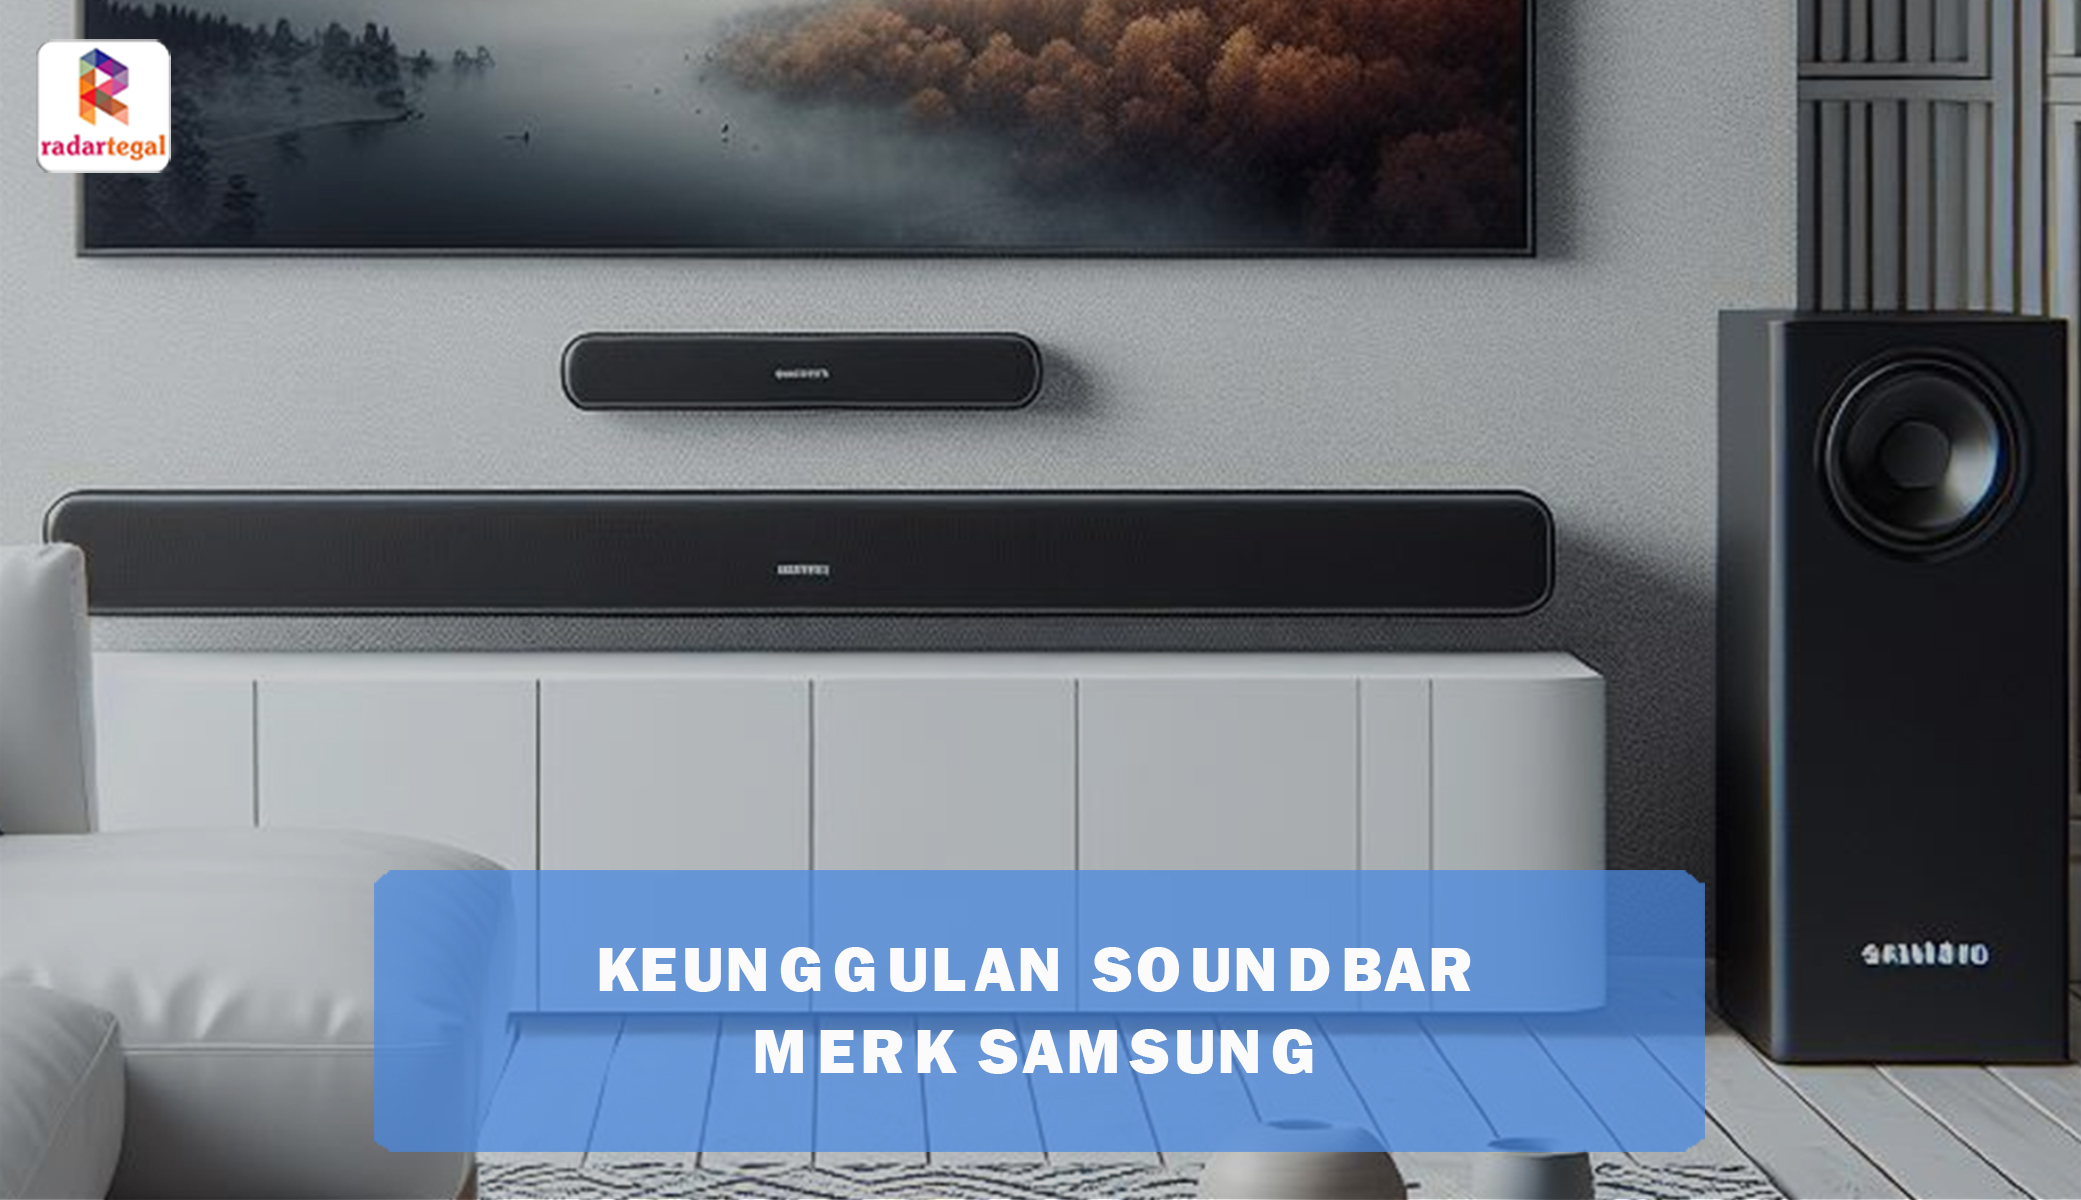 Rahasia Keunggulan Soundbar Merk Samsung, Suara Subwoofernya Begitu Menggelegar